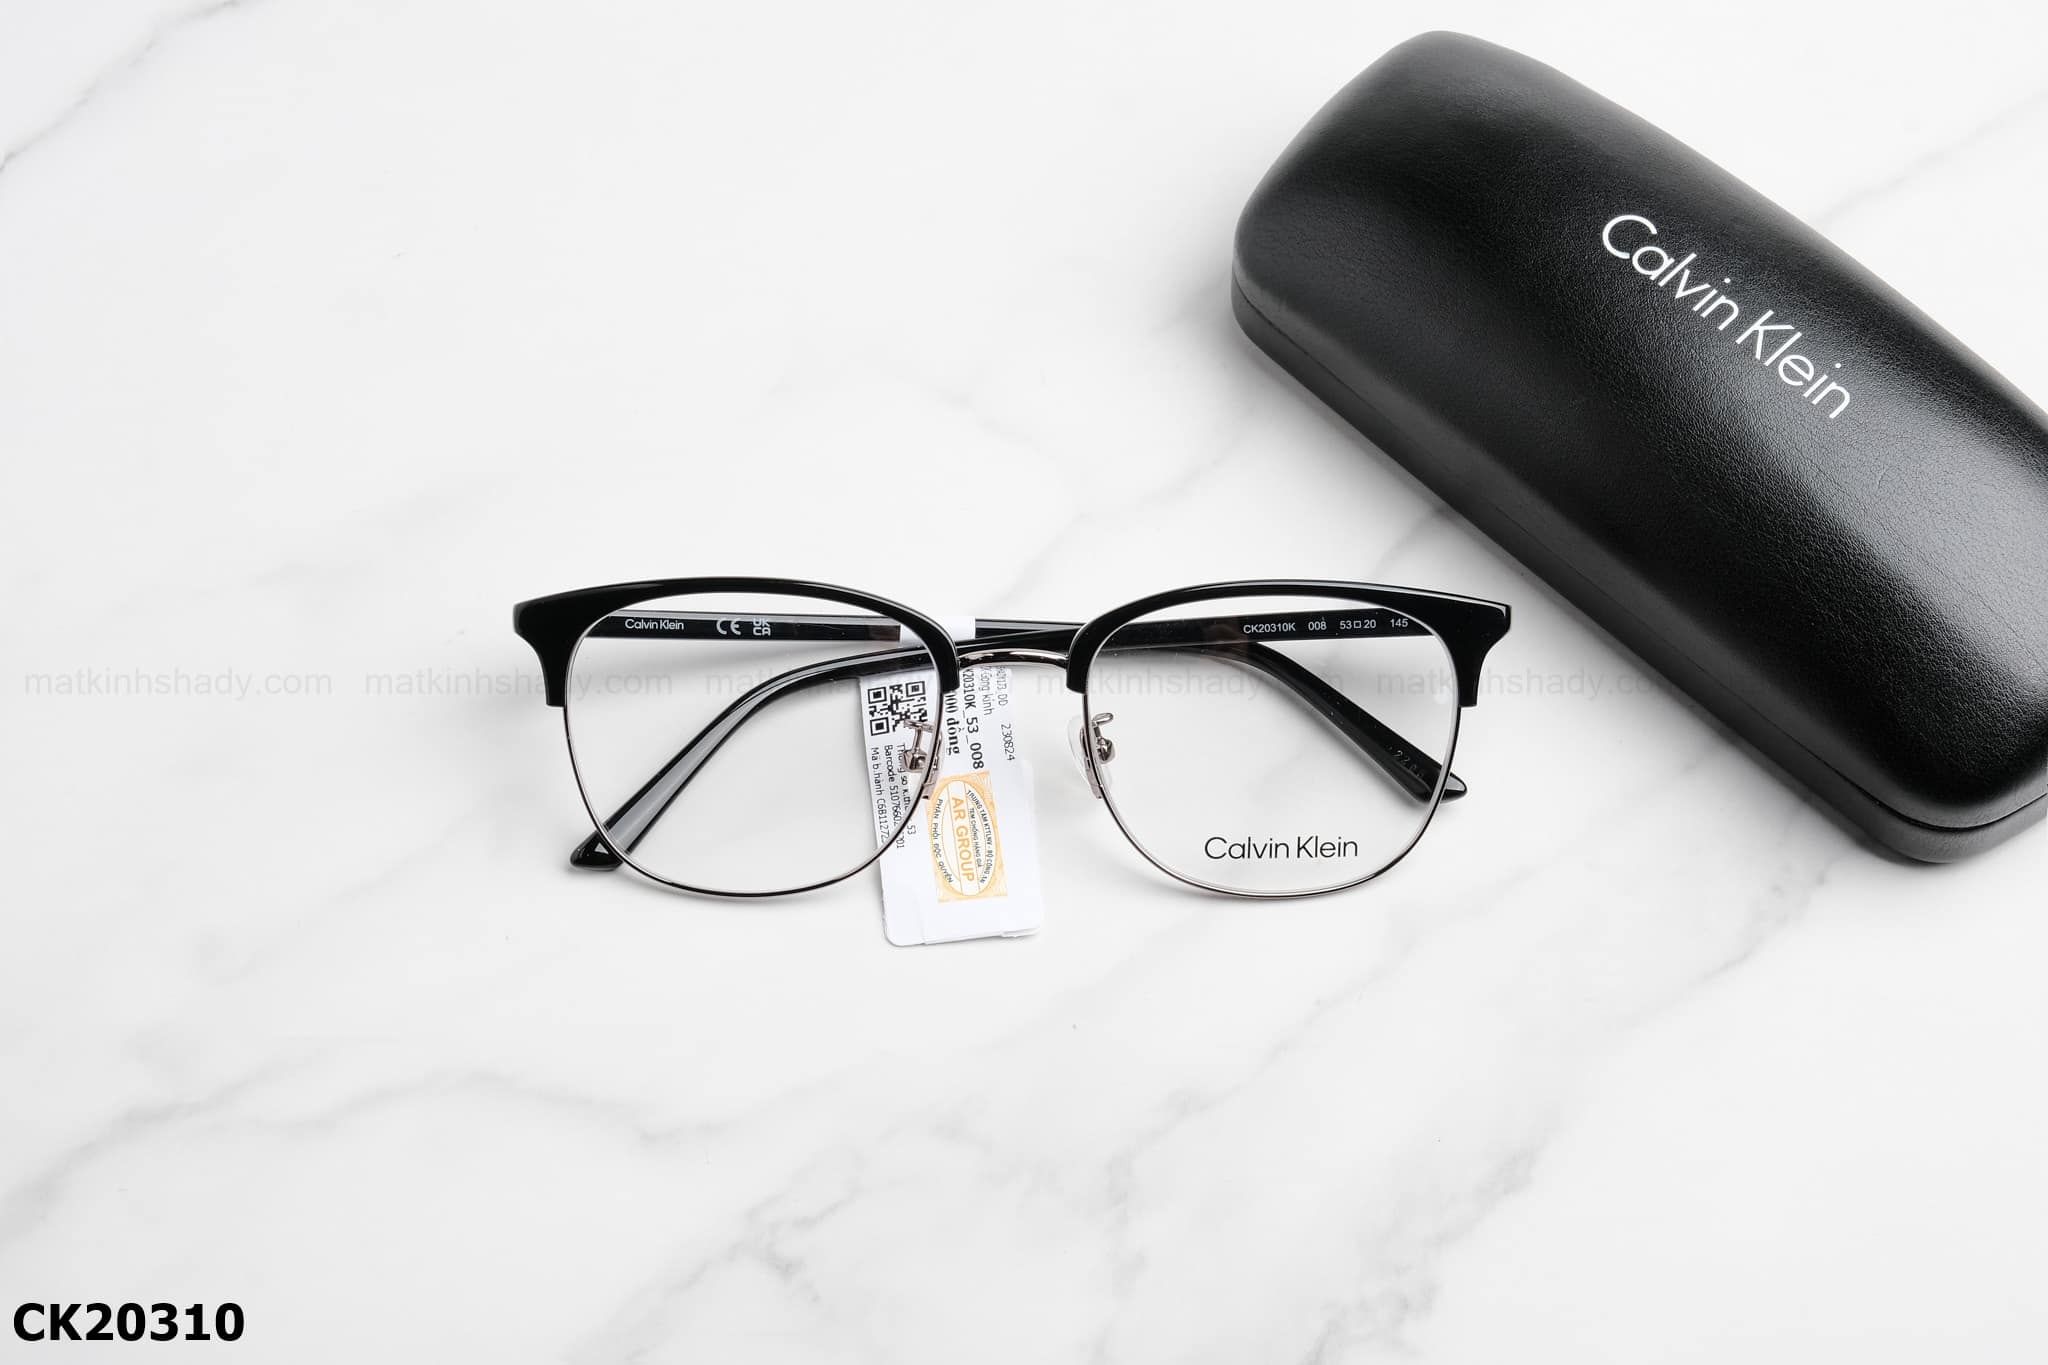  Calvin Klein Eyewear - Glasses - CK20310 